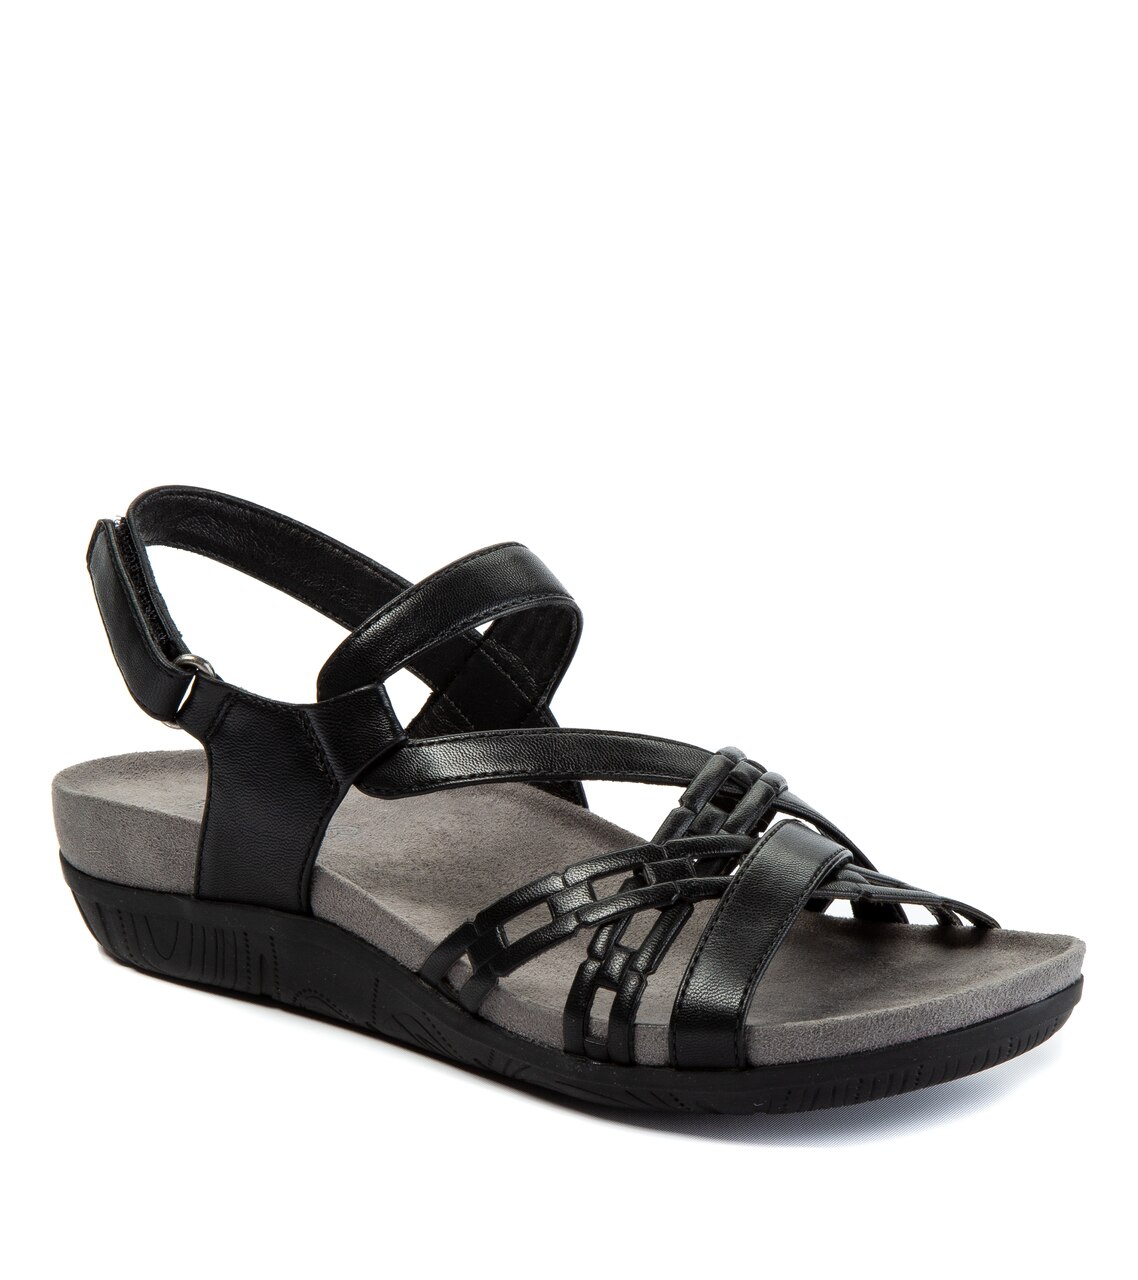 Baretraps JEWEL Women's Sandals Black/Dark Grey | eBay